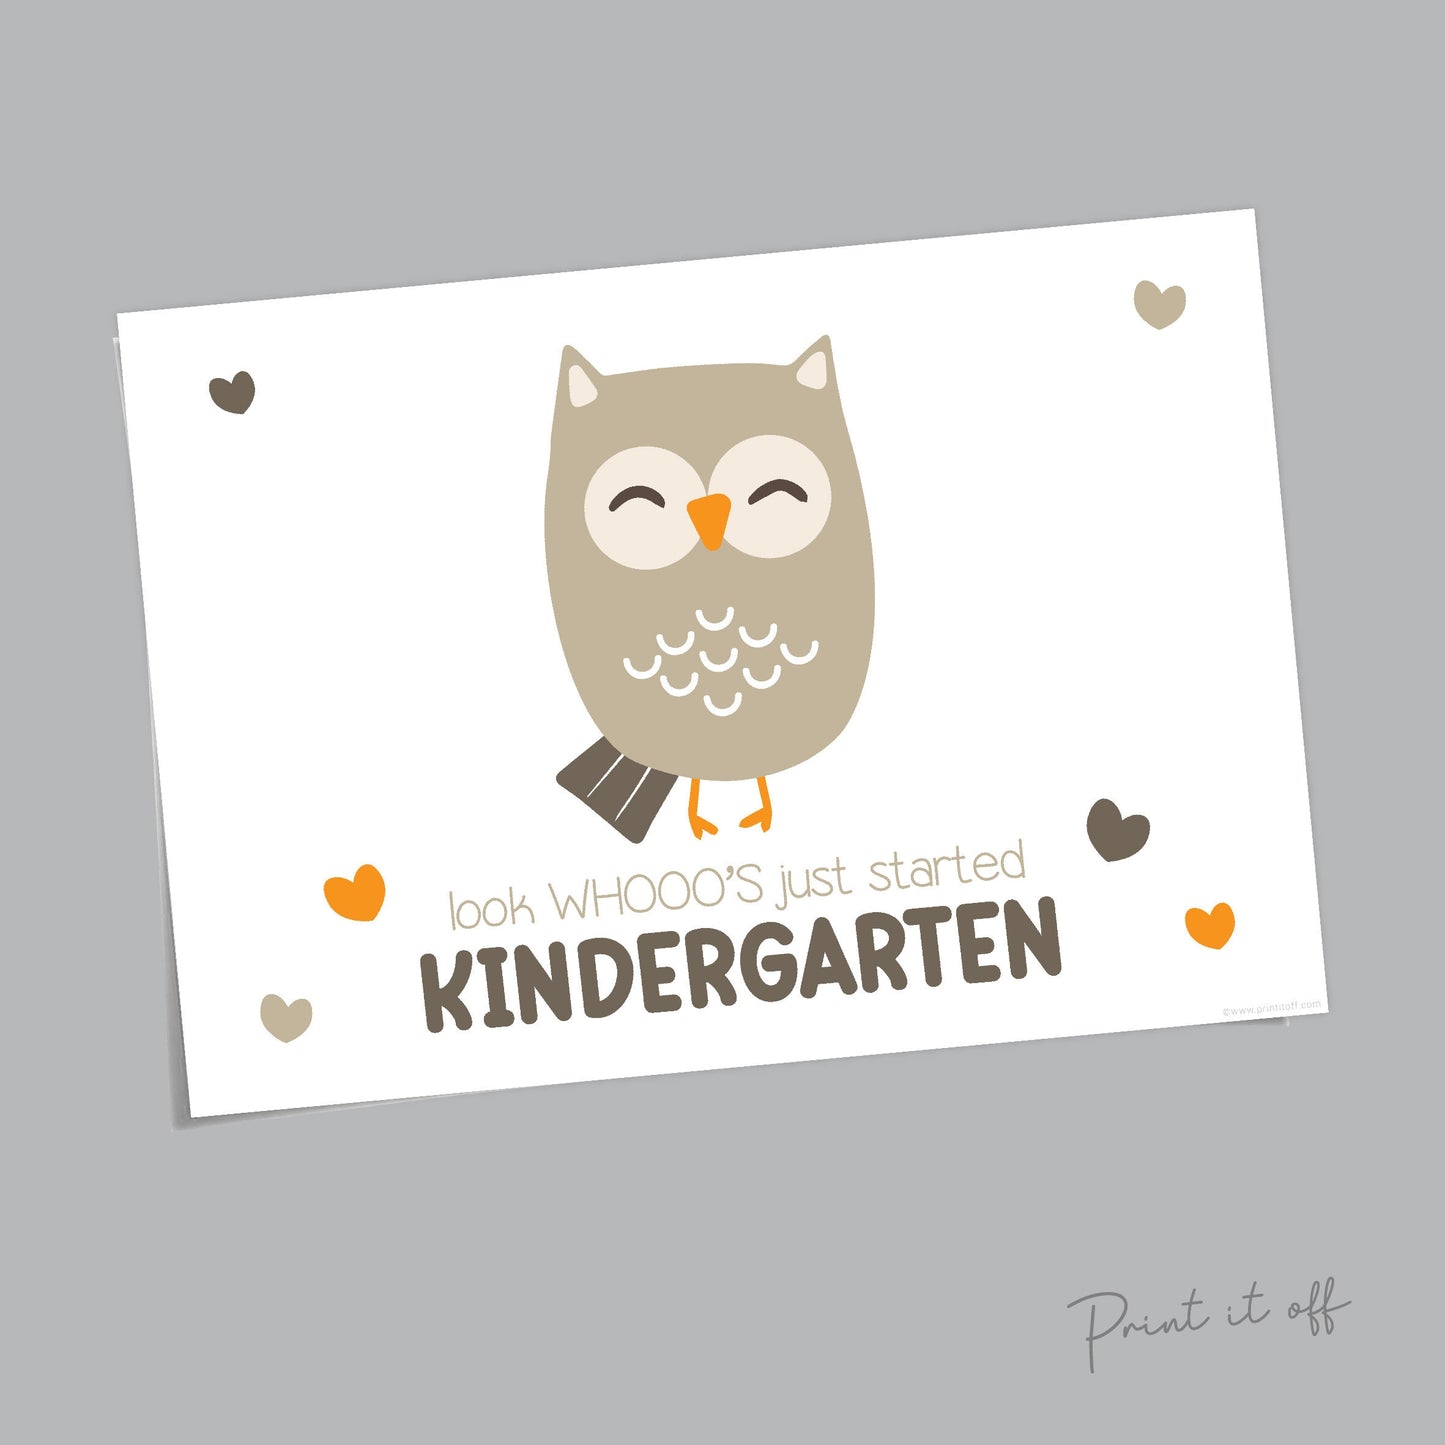 Owl Kindergarten / First Day of School Kindy / Handprint Hand Art Craft Kids / Memory Keepsake Printable Card Decor Sign / PRINT IT OFF 0550